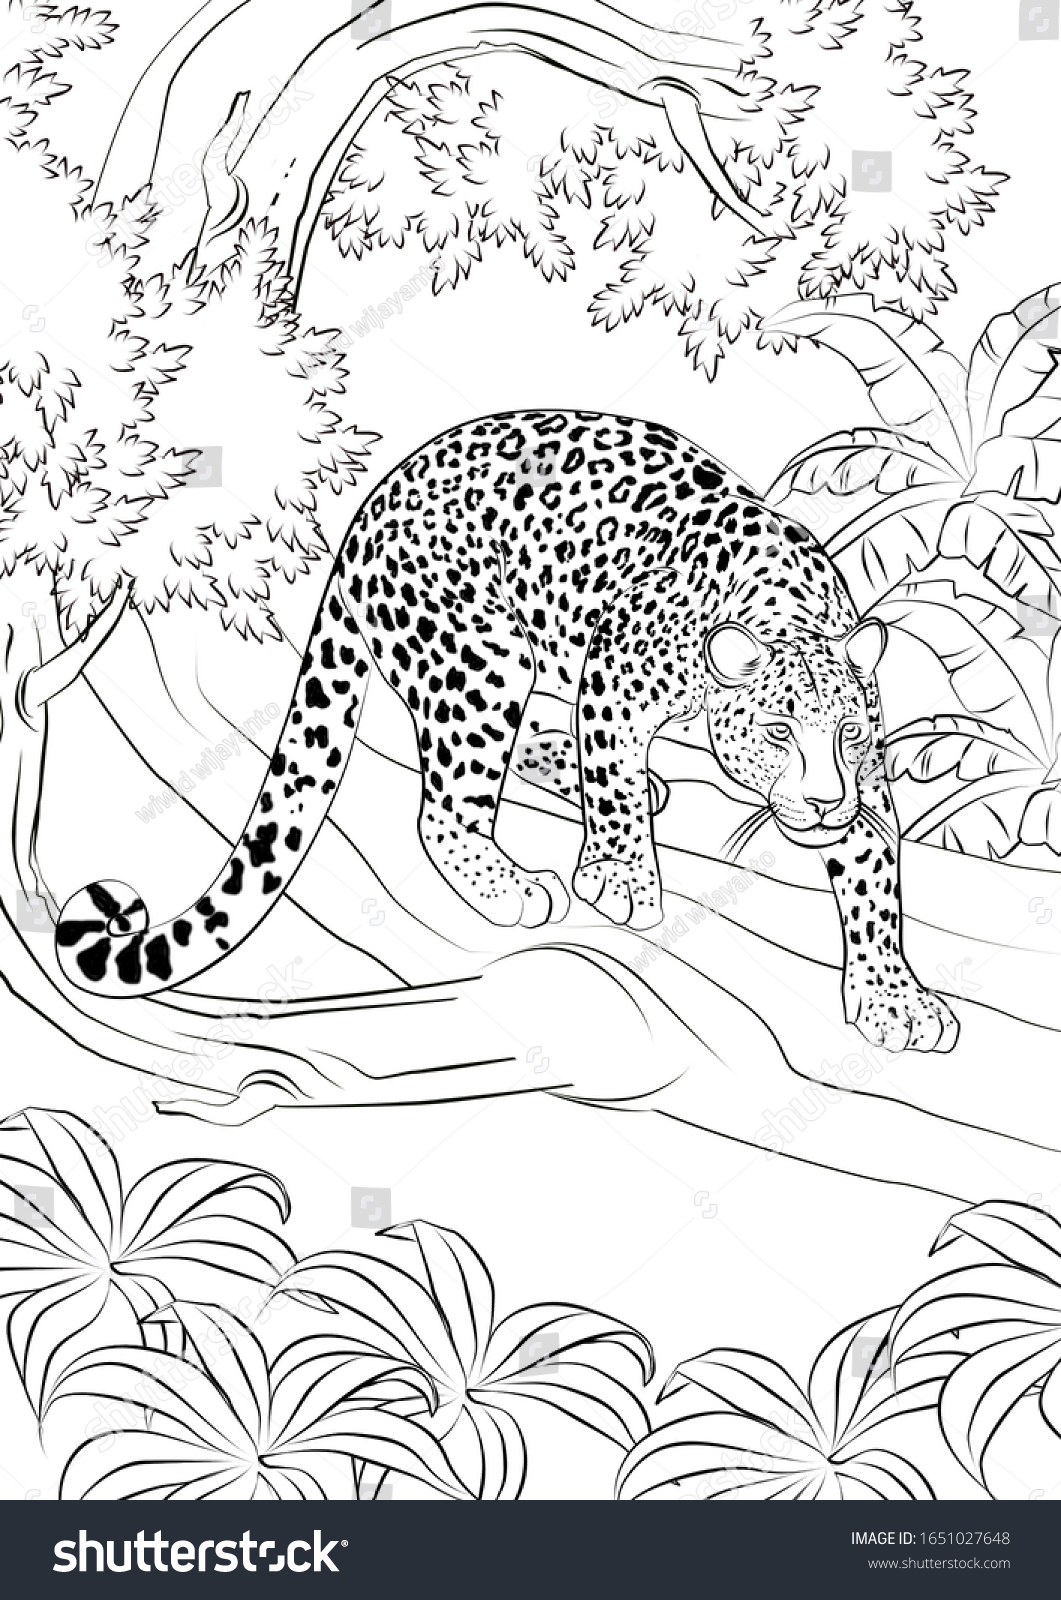 Hakuun leopard realistic animal coloring pages liittyvã kuvituskuva